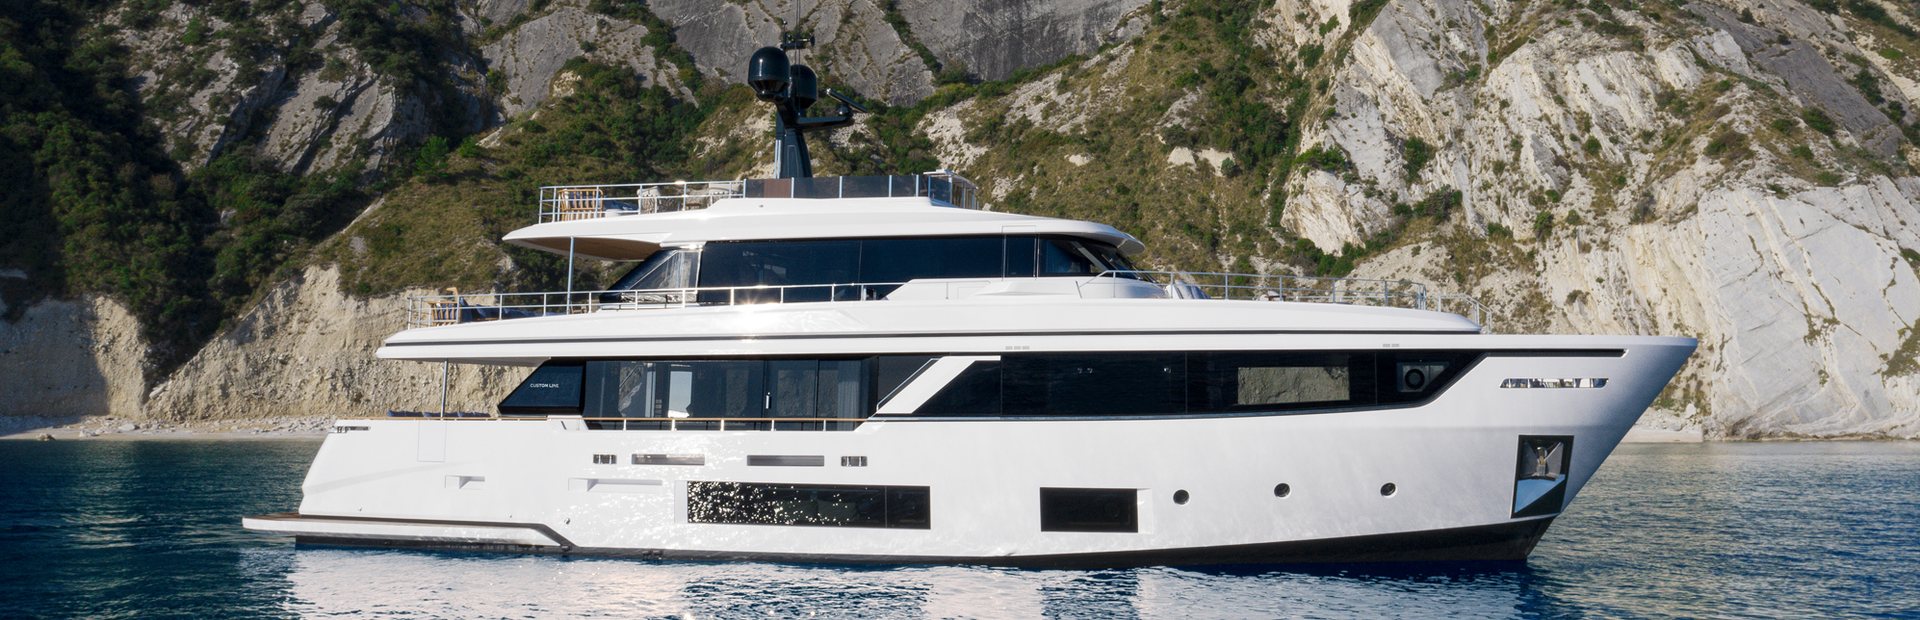 Navetta 30 Project Yacht